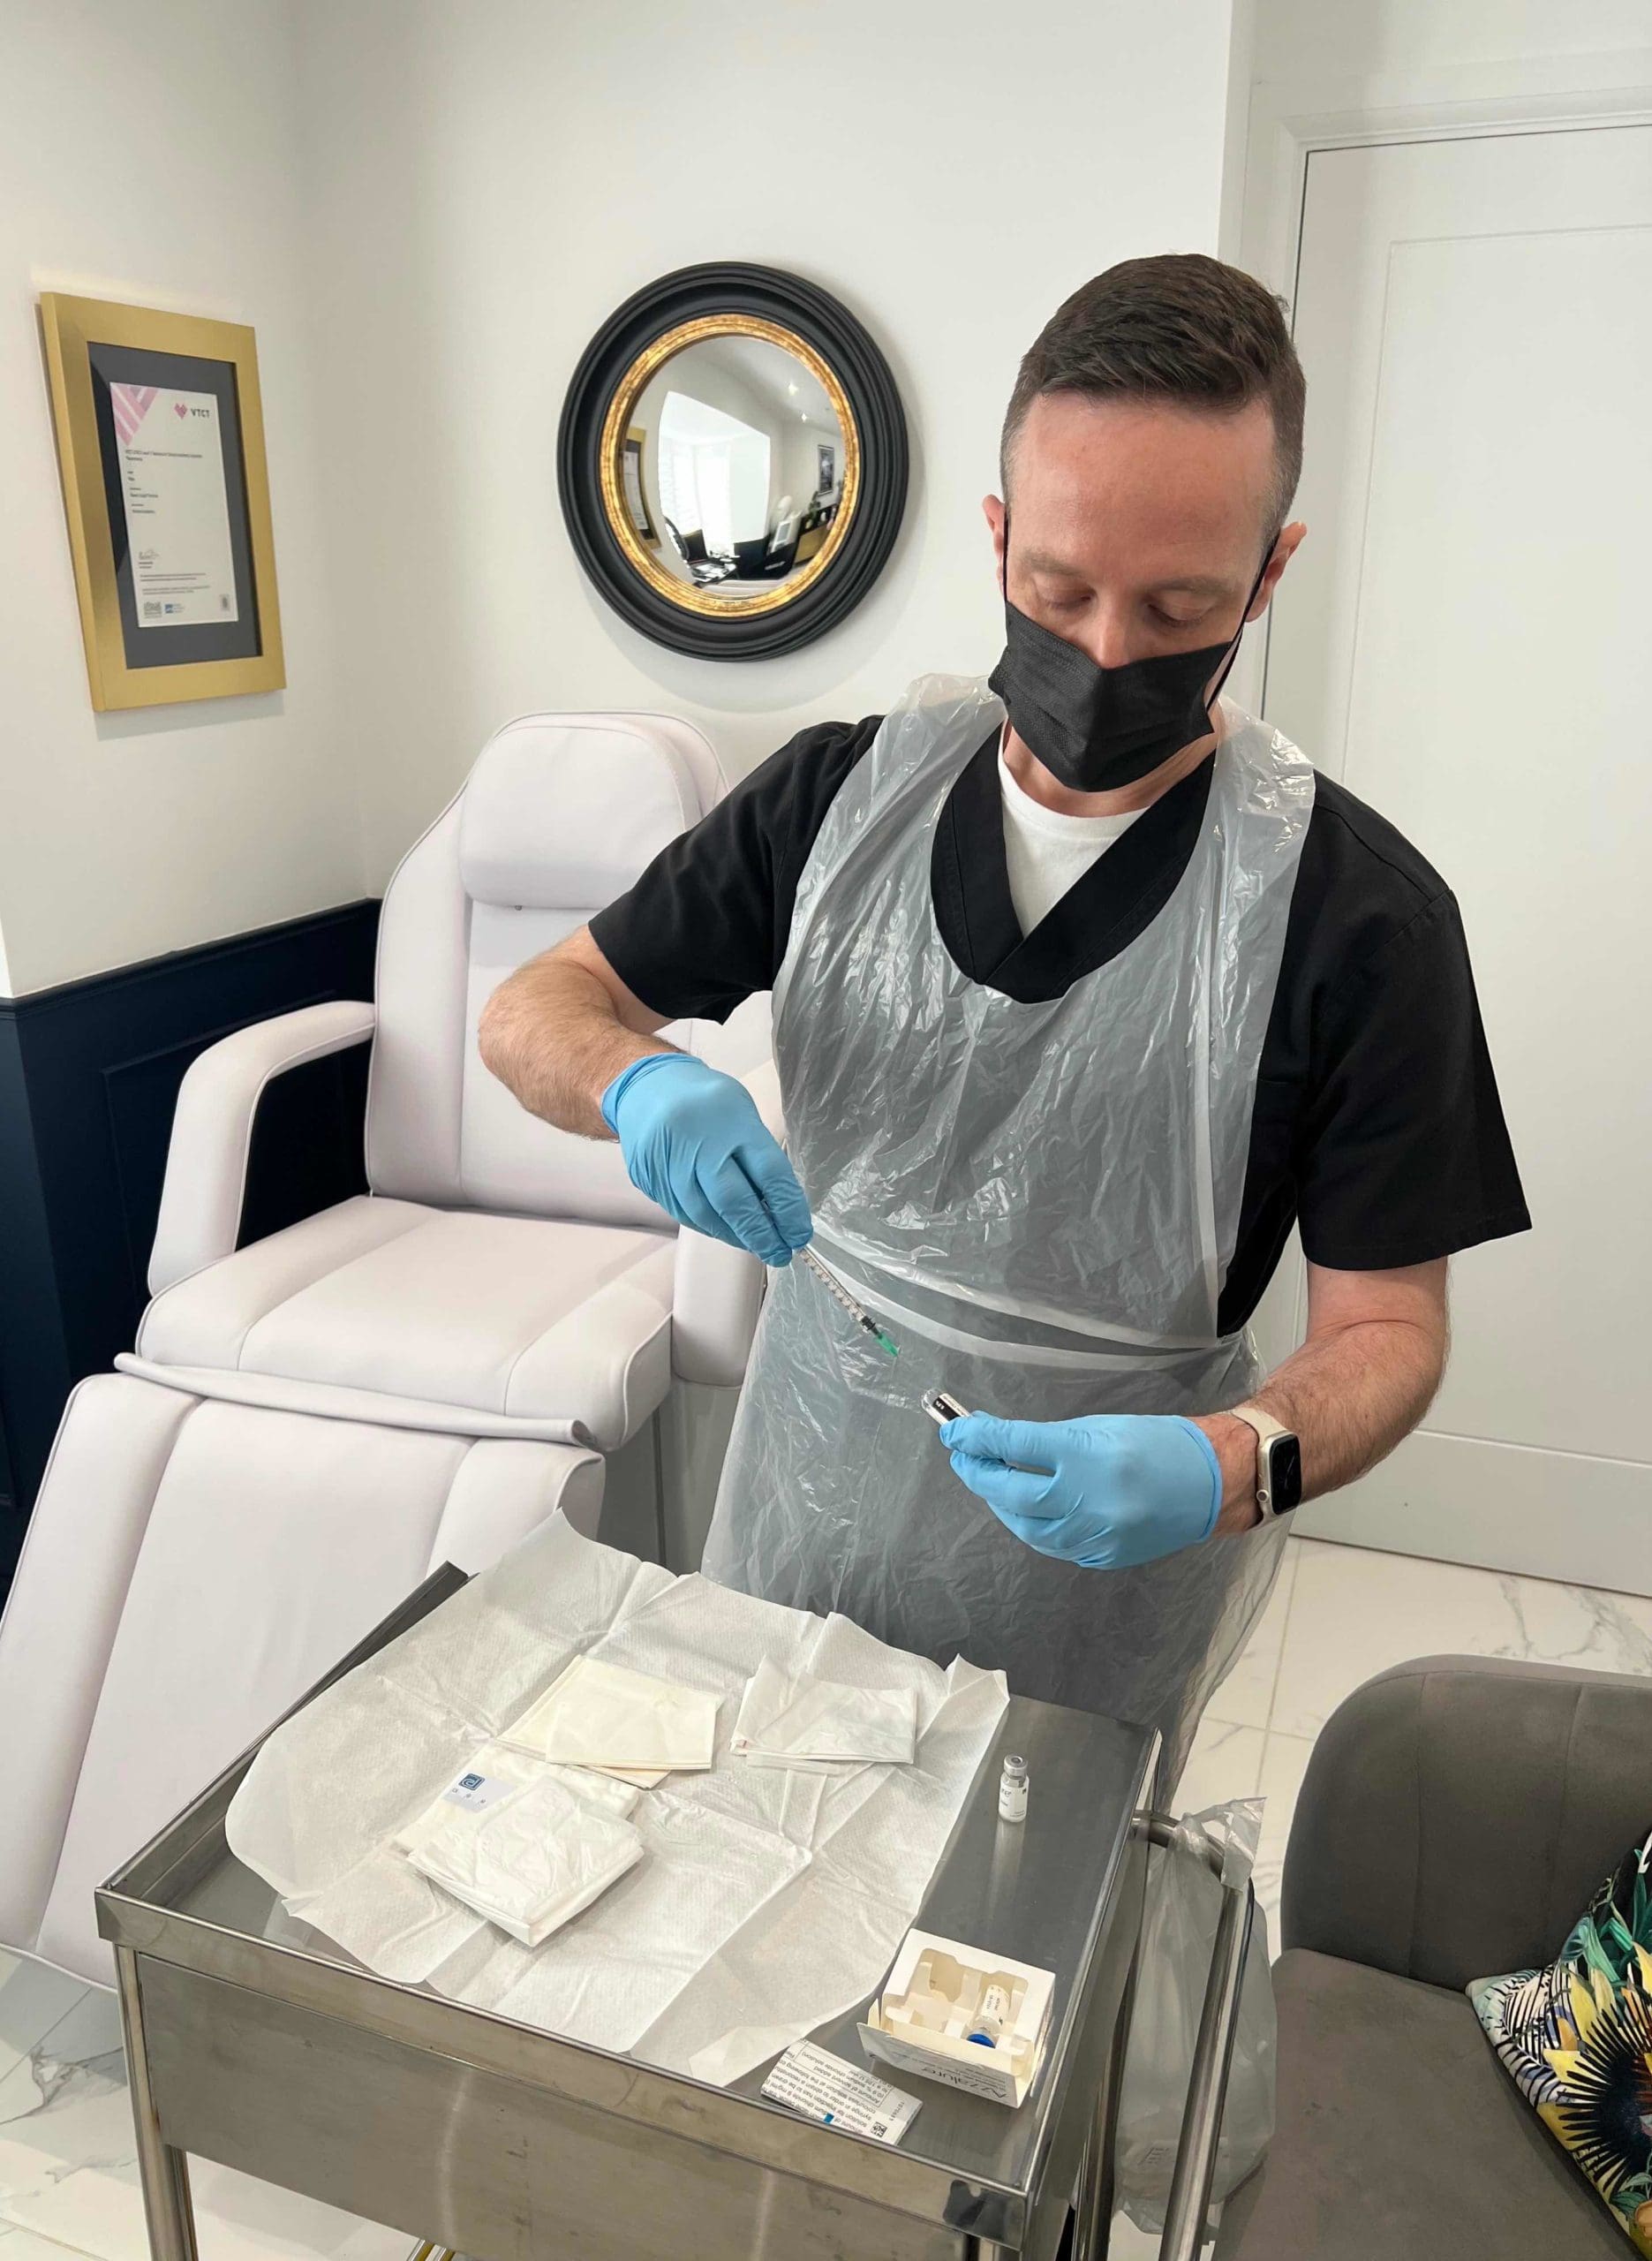 Dr Owen Thomas preparing aesthetic injections